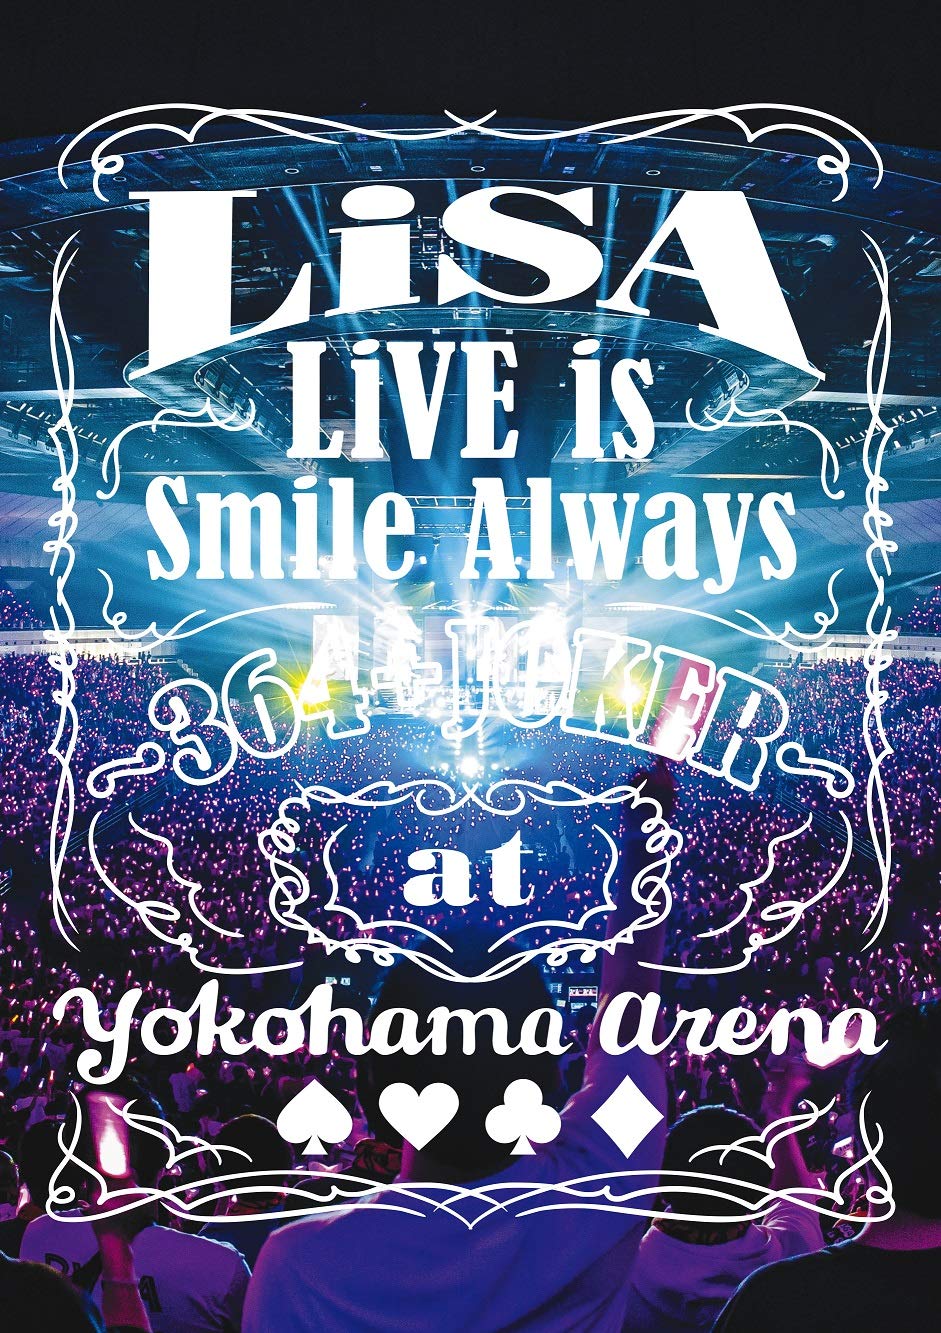 LiSA - LiVE is Smile Always ～ 364 ＋ JOKER ～ at Yokohama Arena